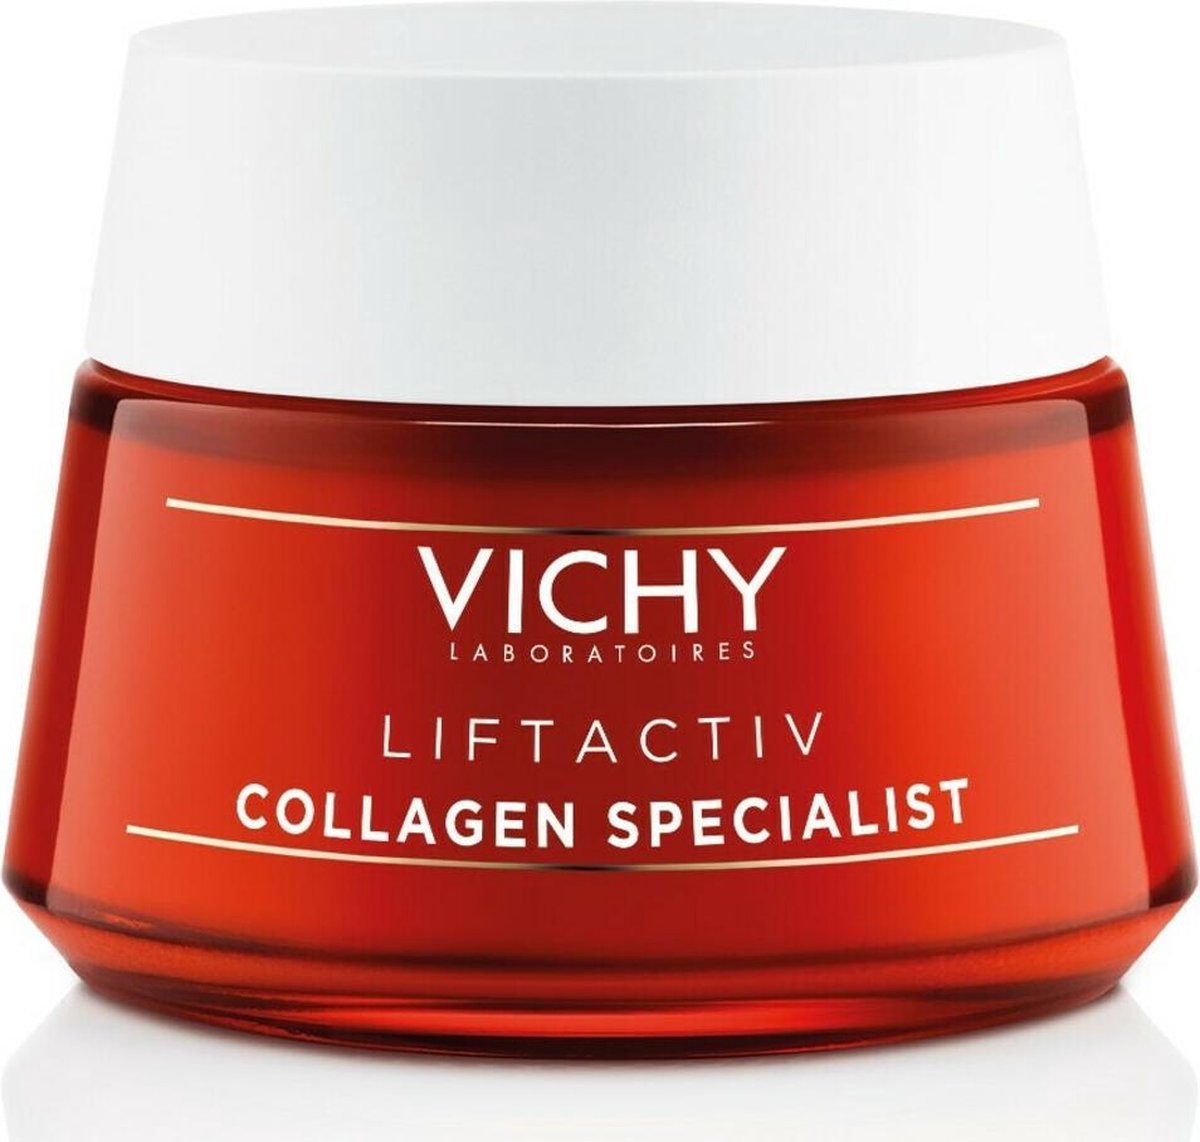 Vichy Liftactiv Collagen Specialist - 50ml